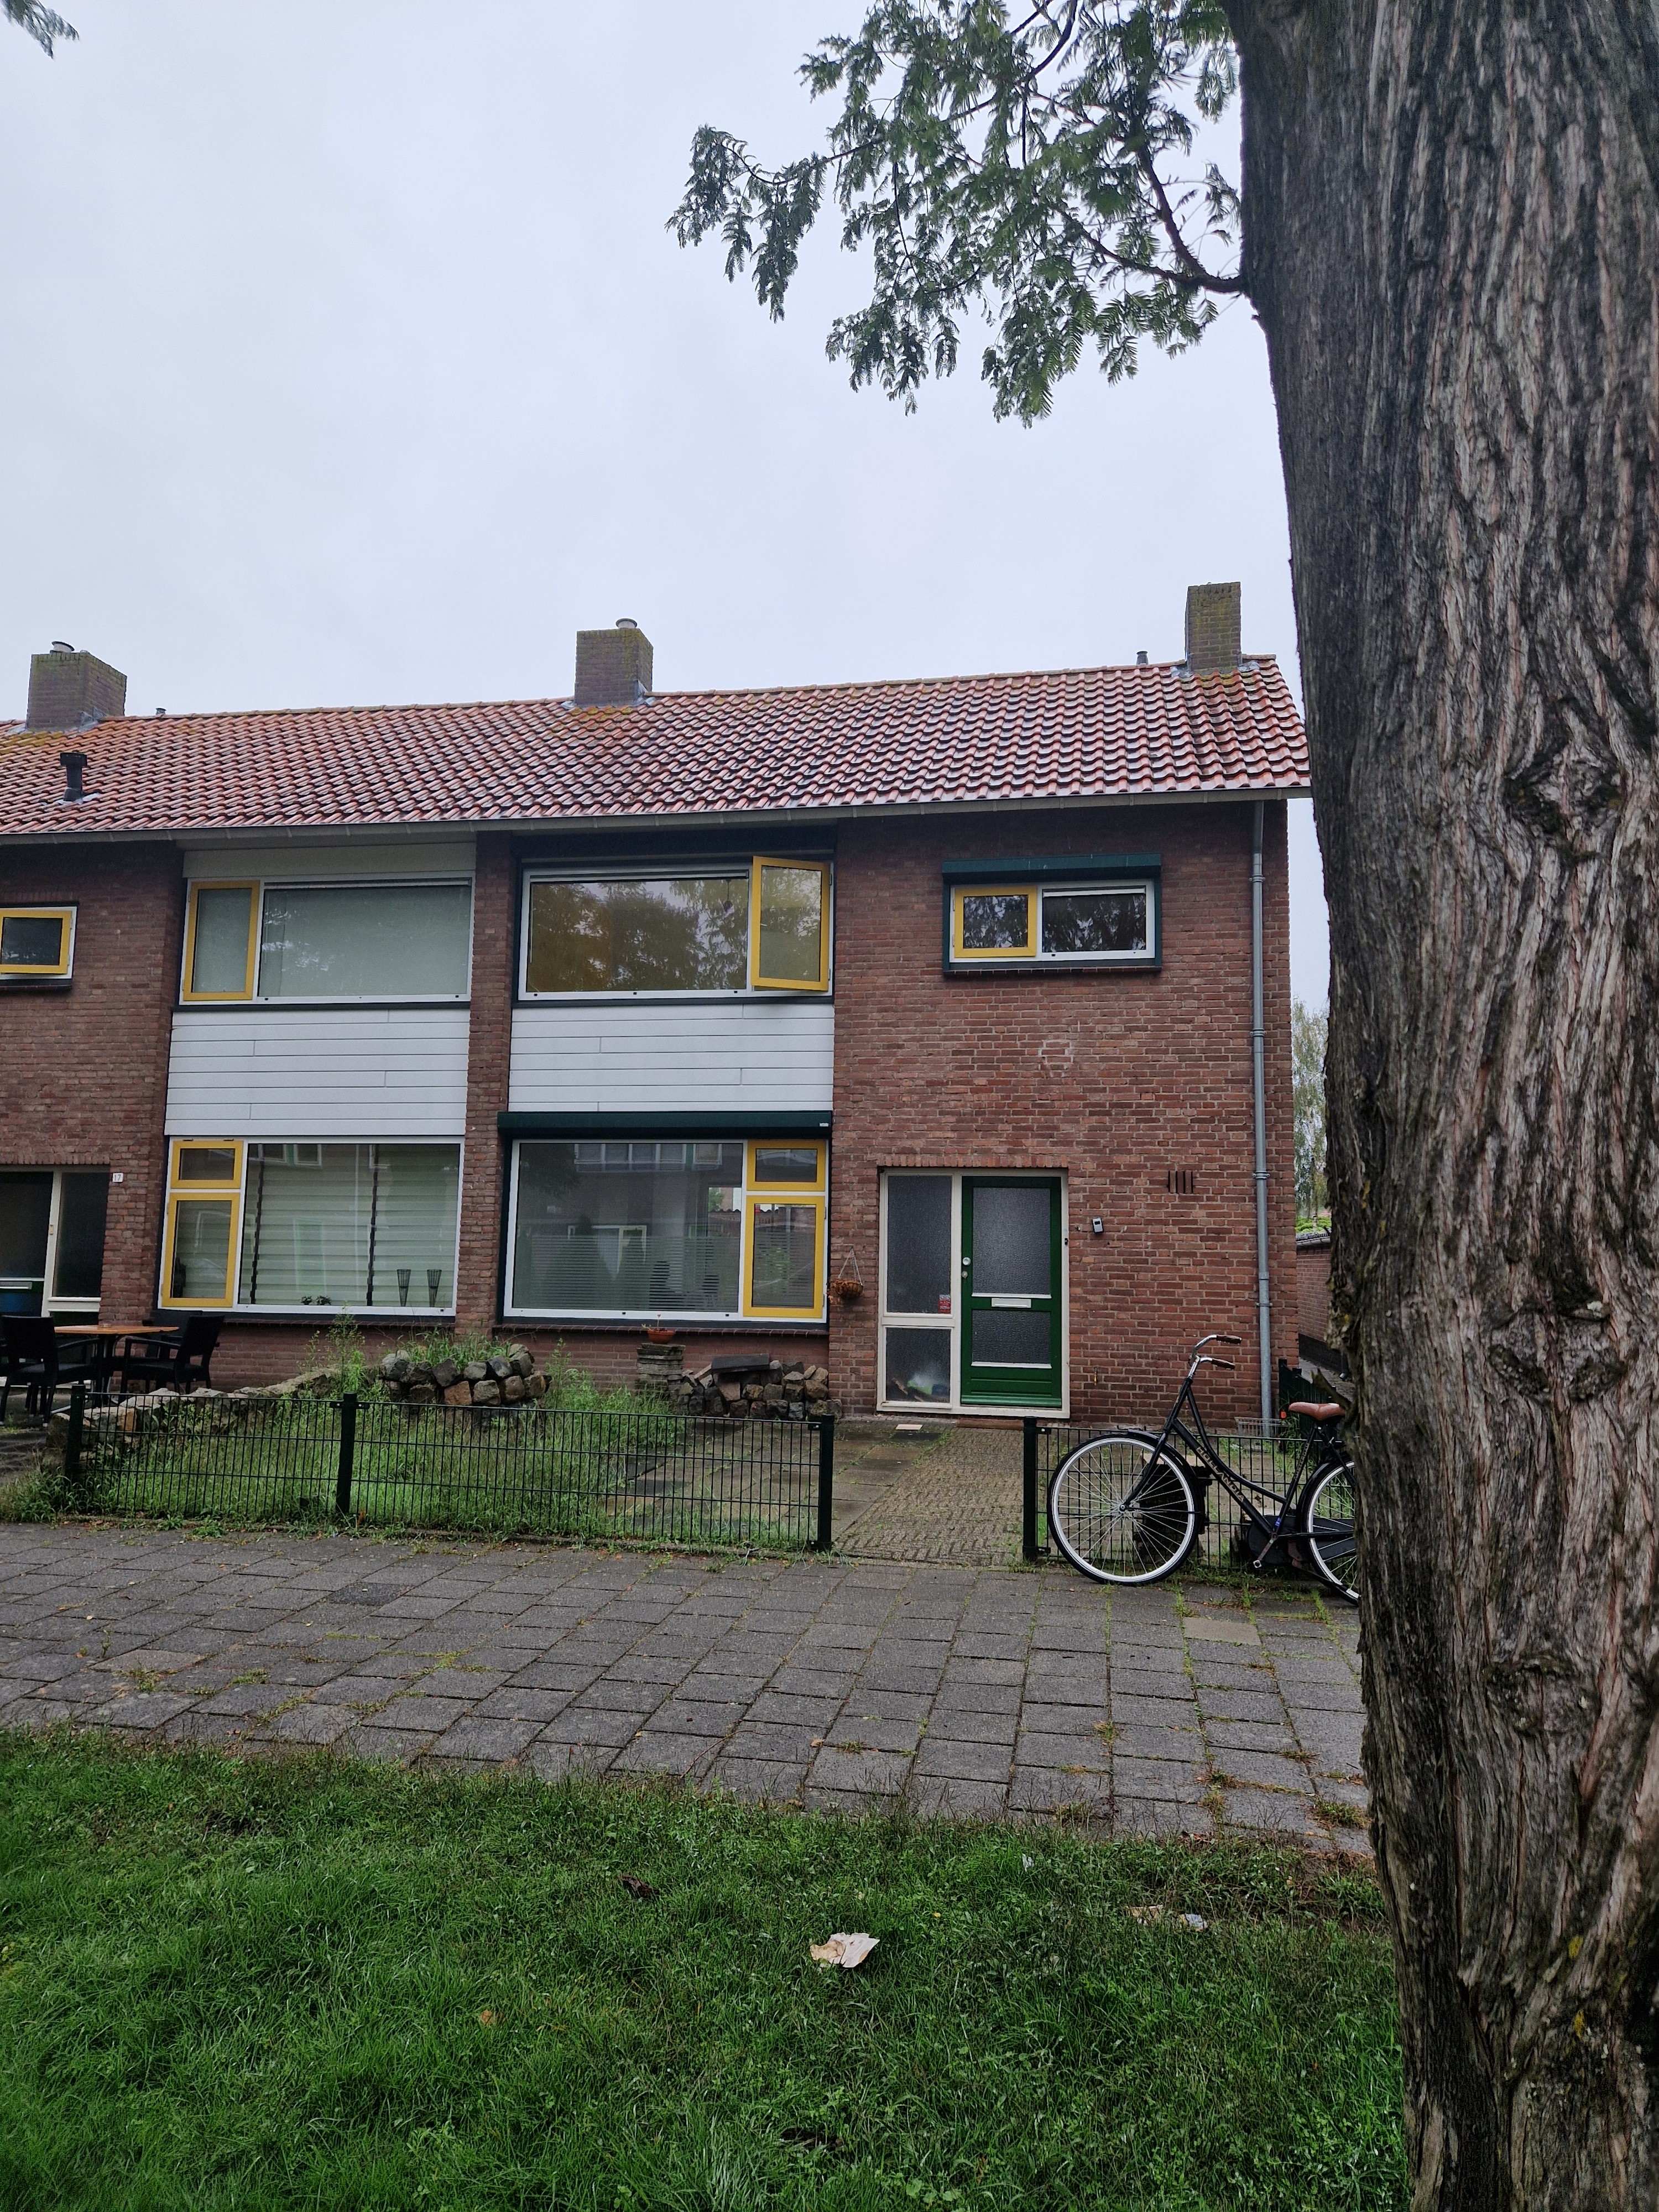 Aalbersestraat 19, 5121 VB Rijen, Nederland